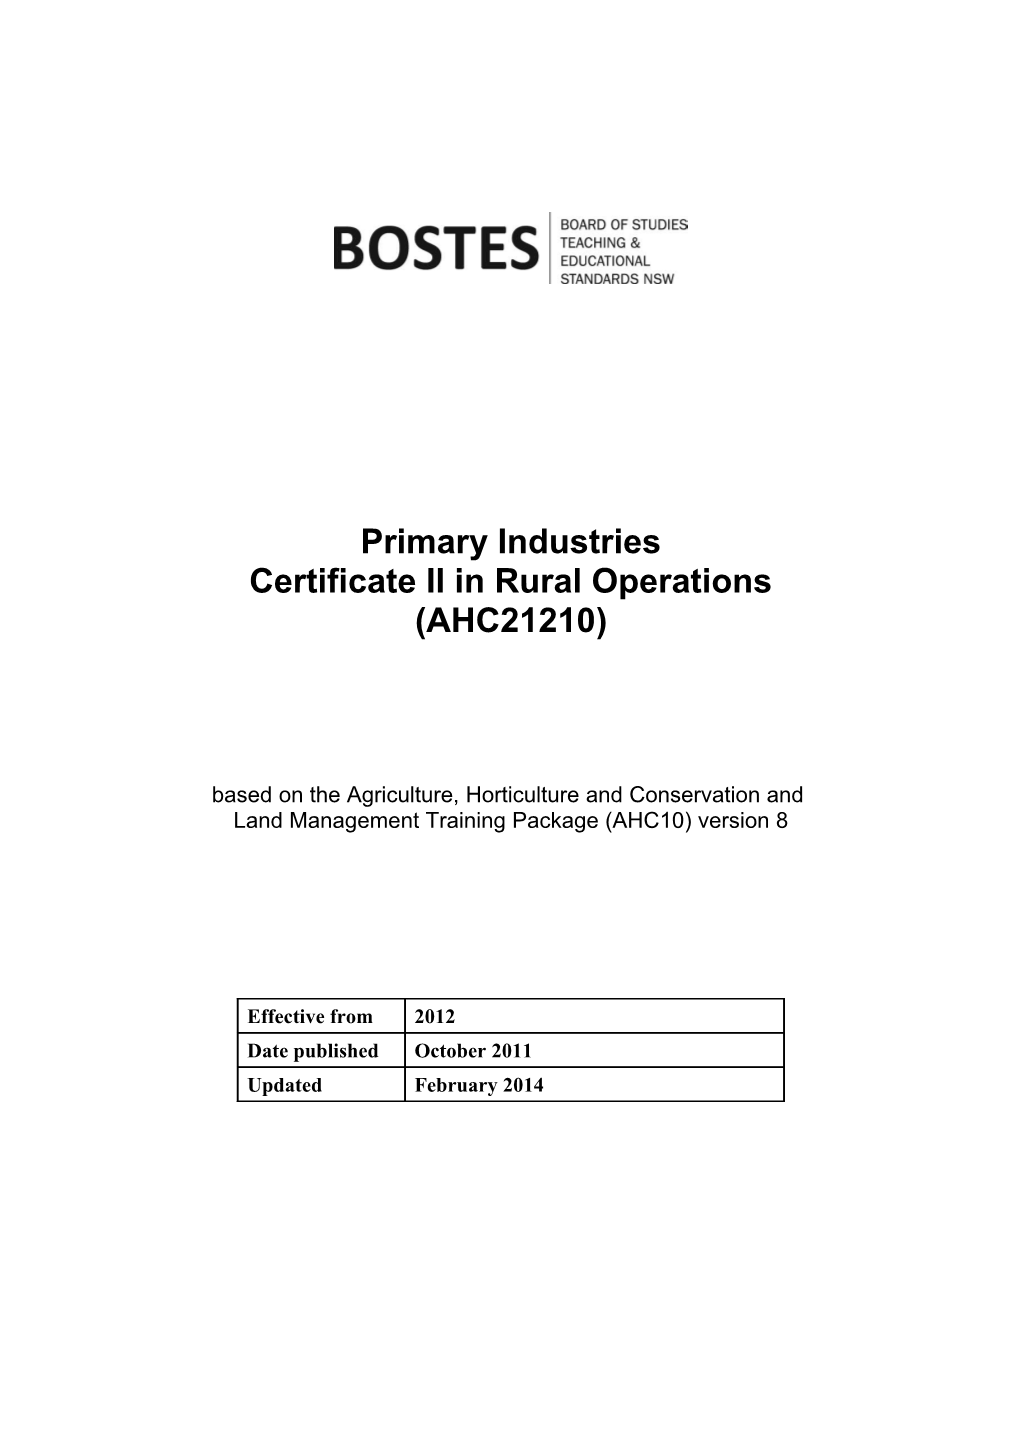 Primary Industries - Certificate II in Rural Operations (AHC21210)